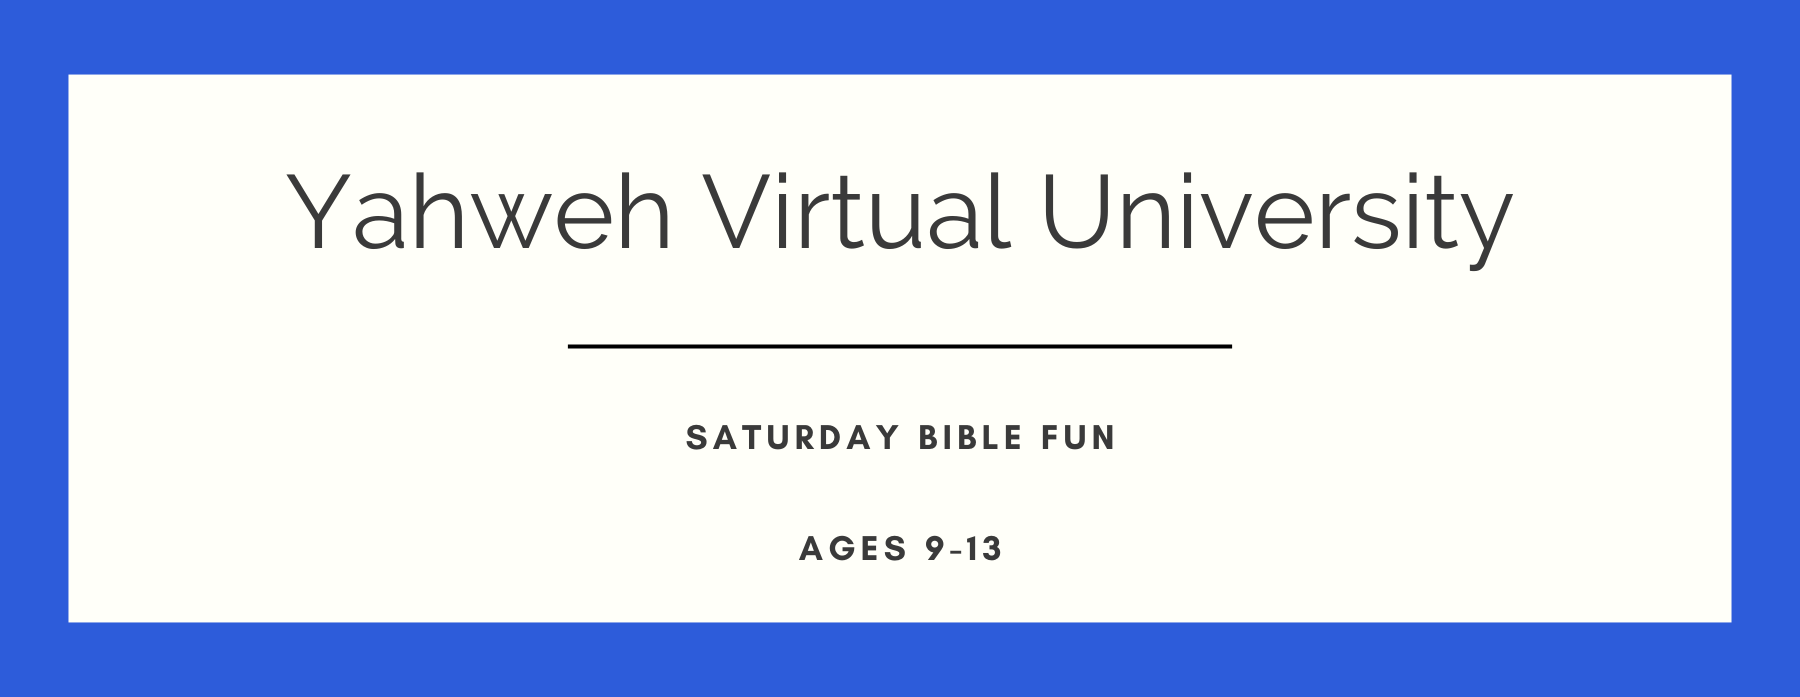 Yahweh Virtual University Saturday Bible Fun Ages 9-13